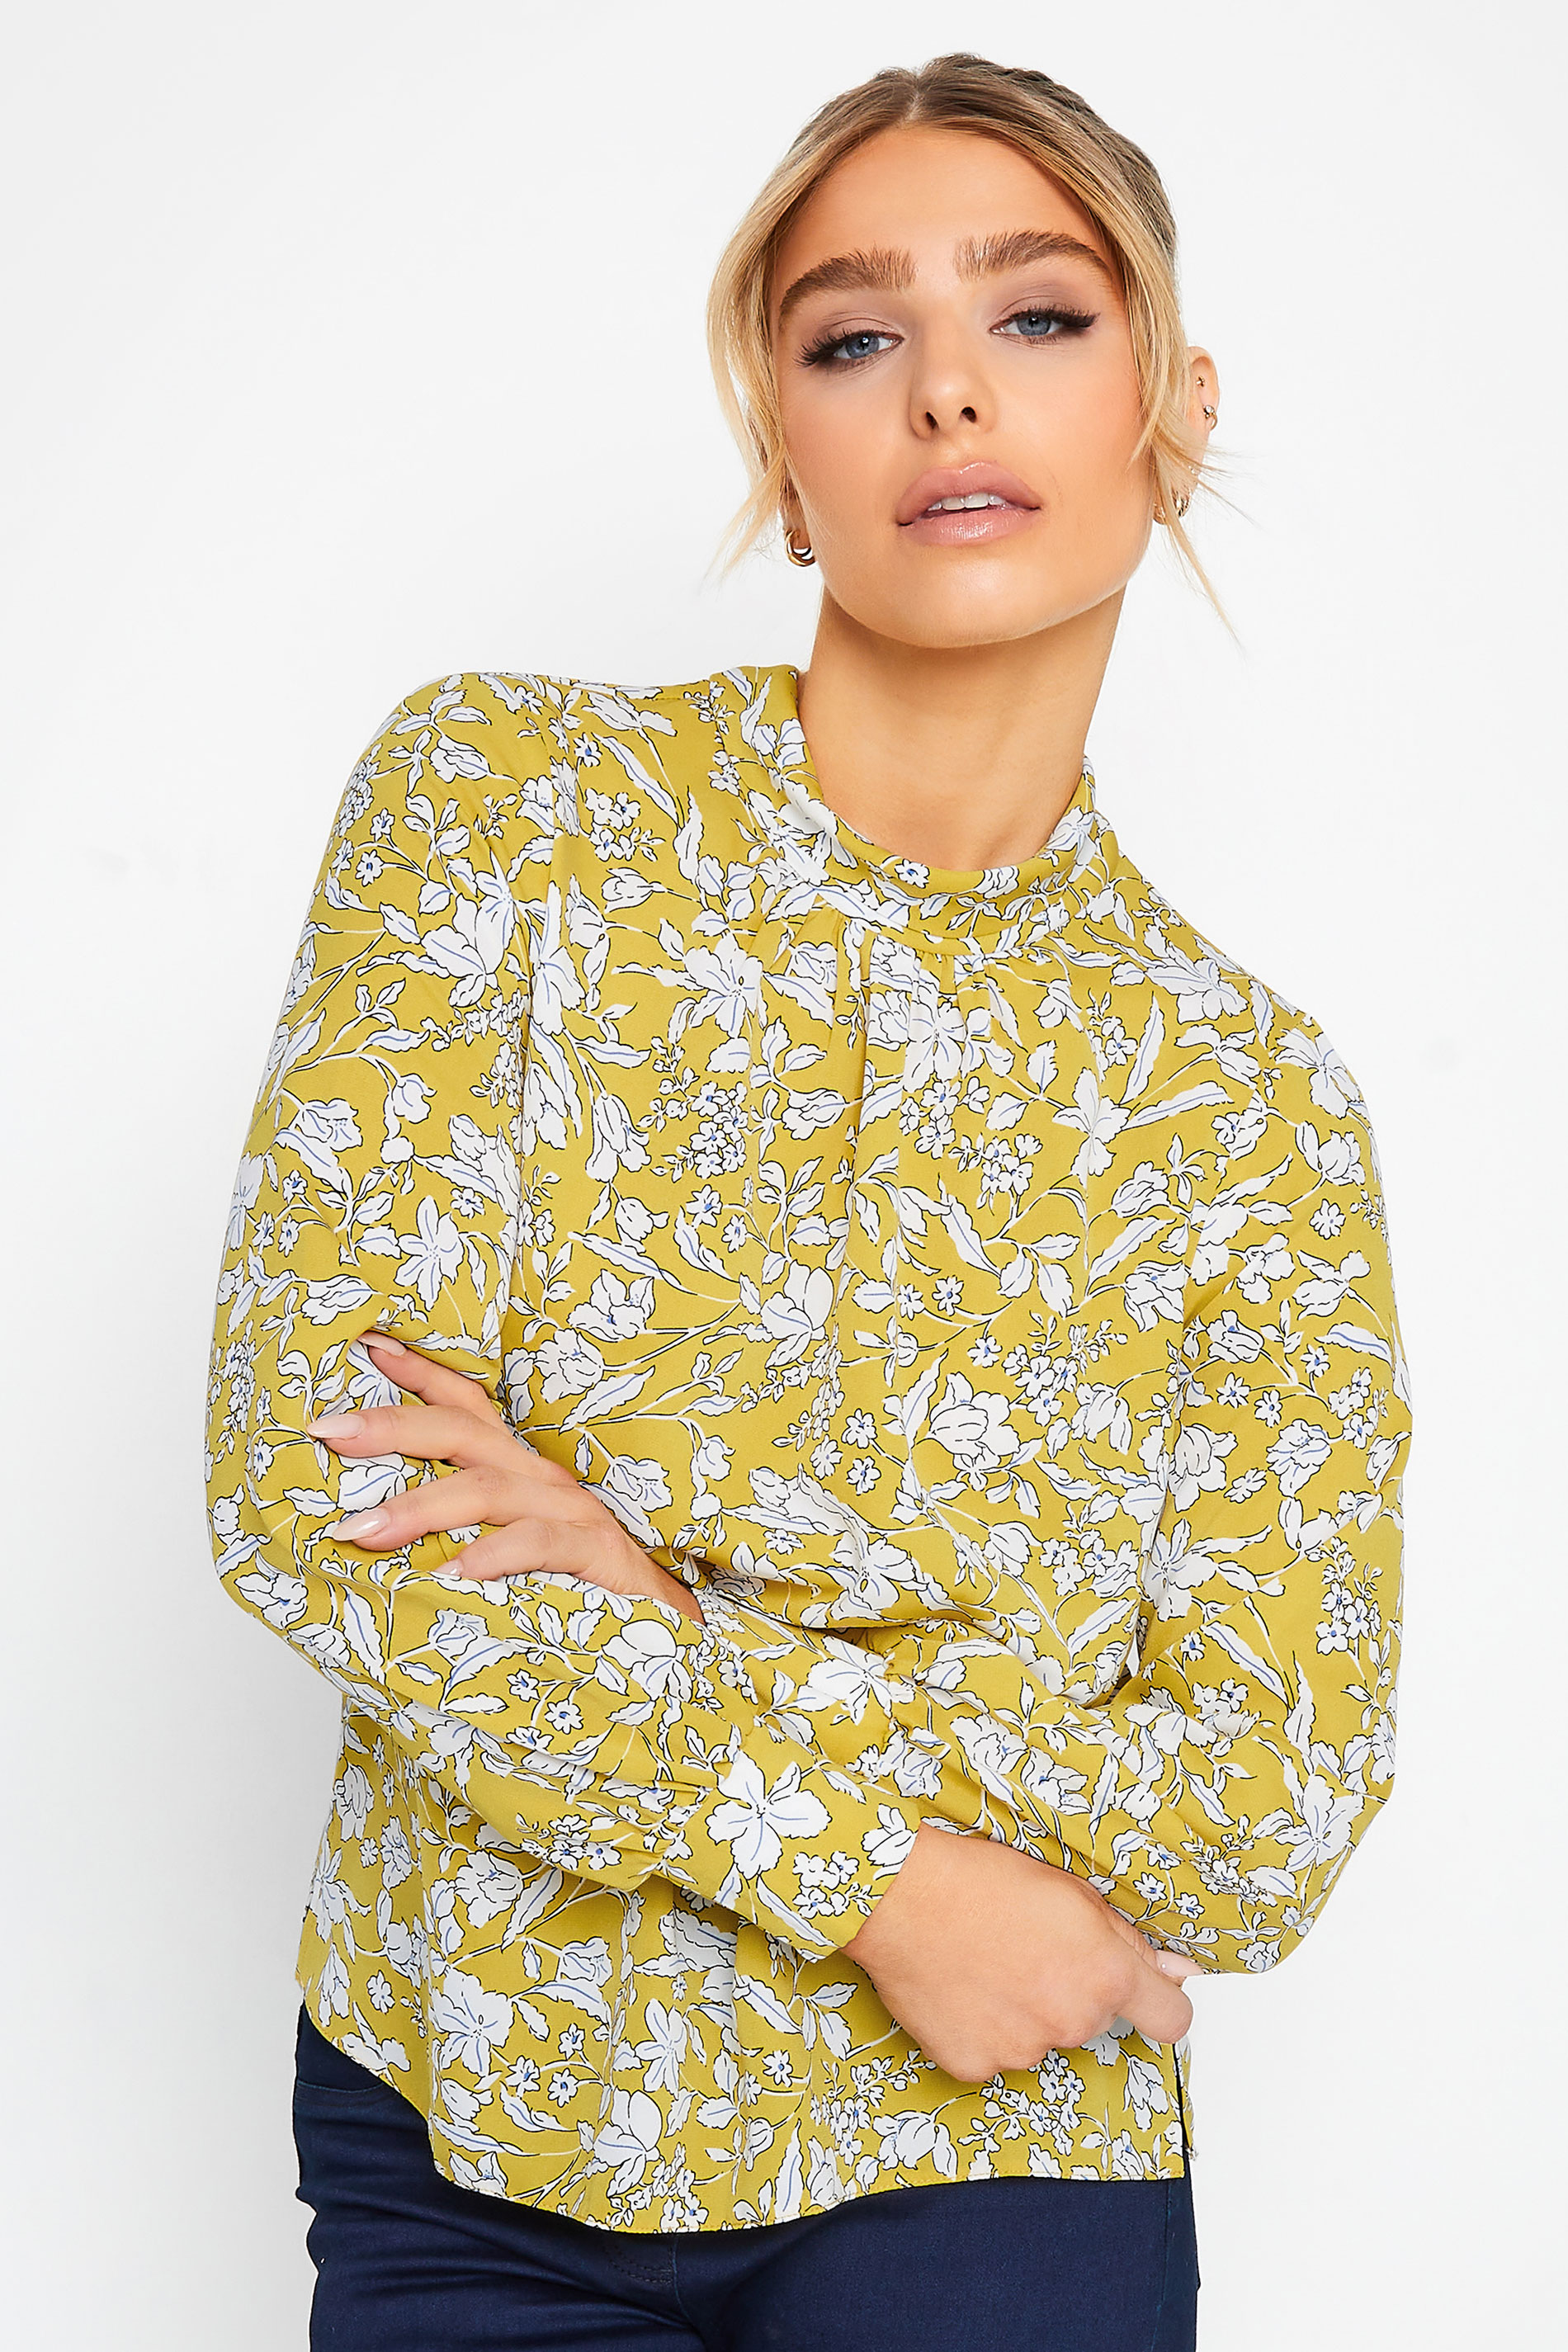 M&Co Yellow Floral Print High Neck Blouse | M&Co 1